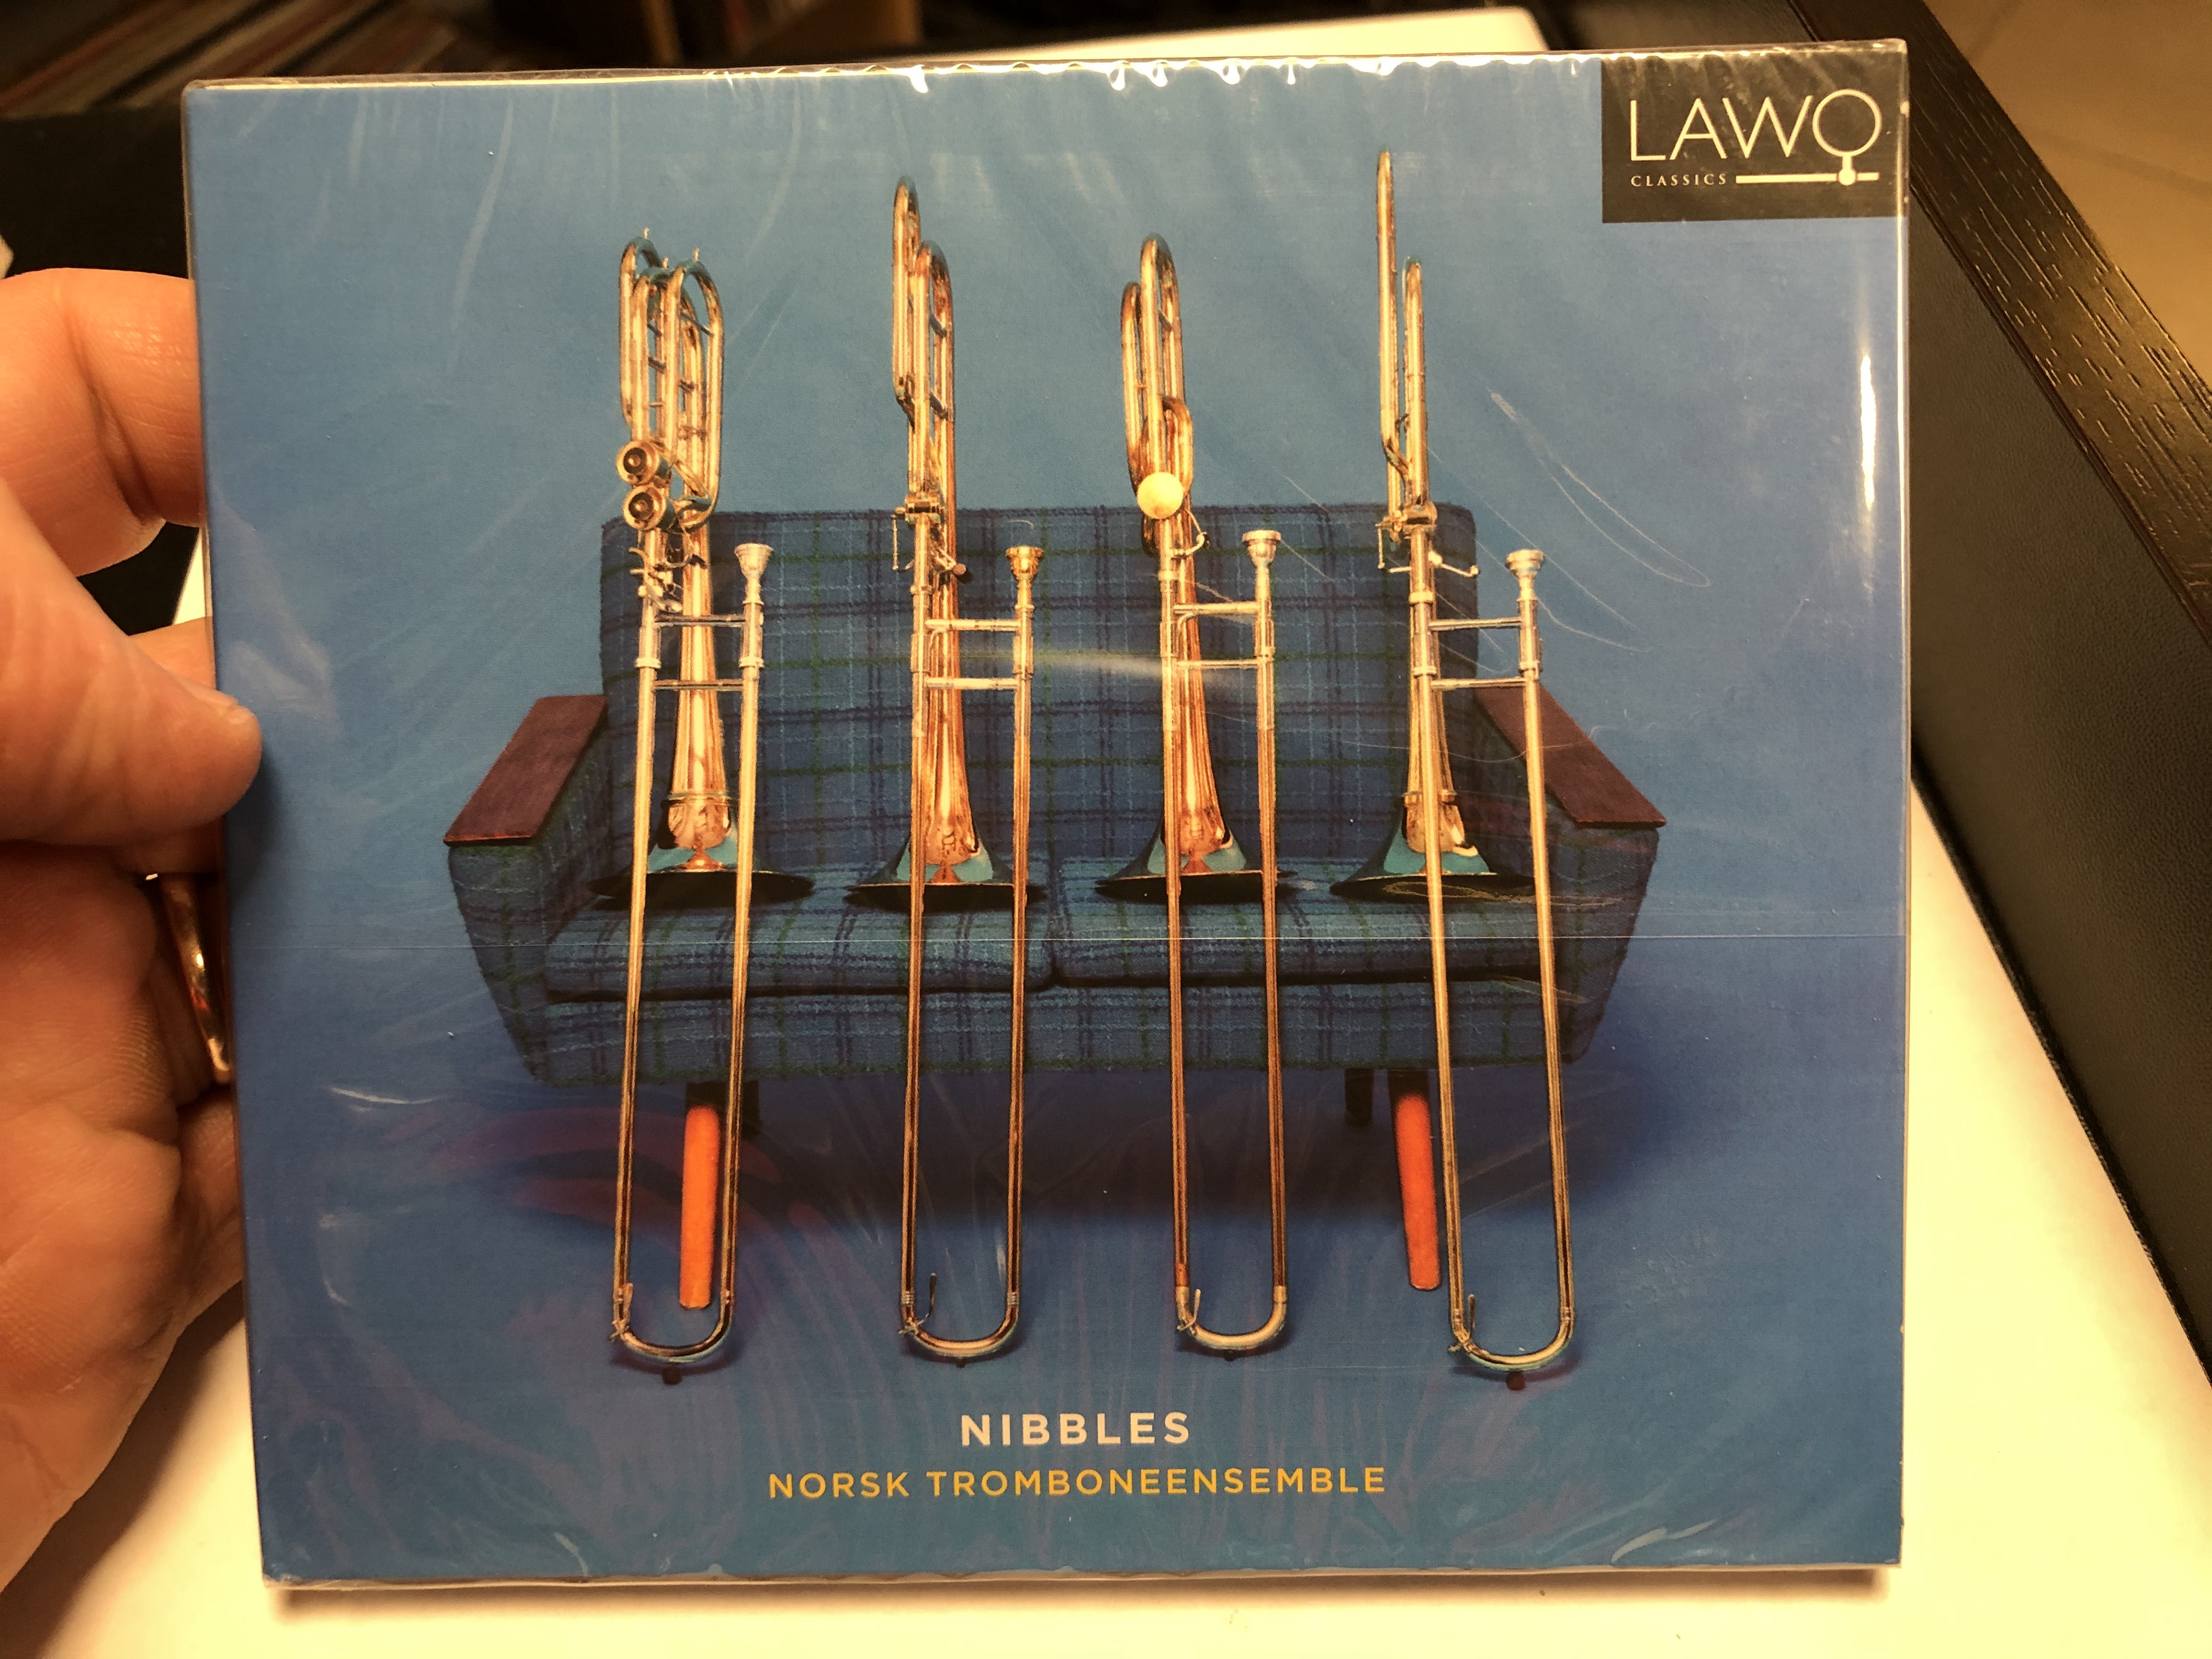 nibbles-norsk-tromboneensemble-lawo-classics-audio-cd-2020-stereo-lwc1194-1-.jpg